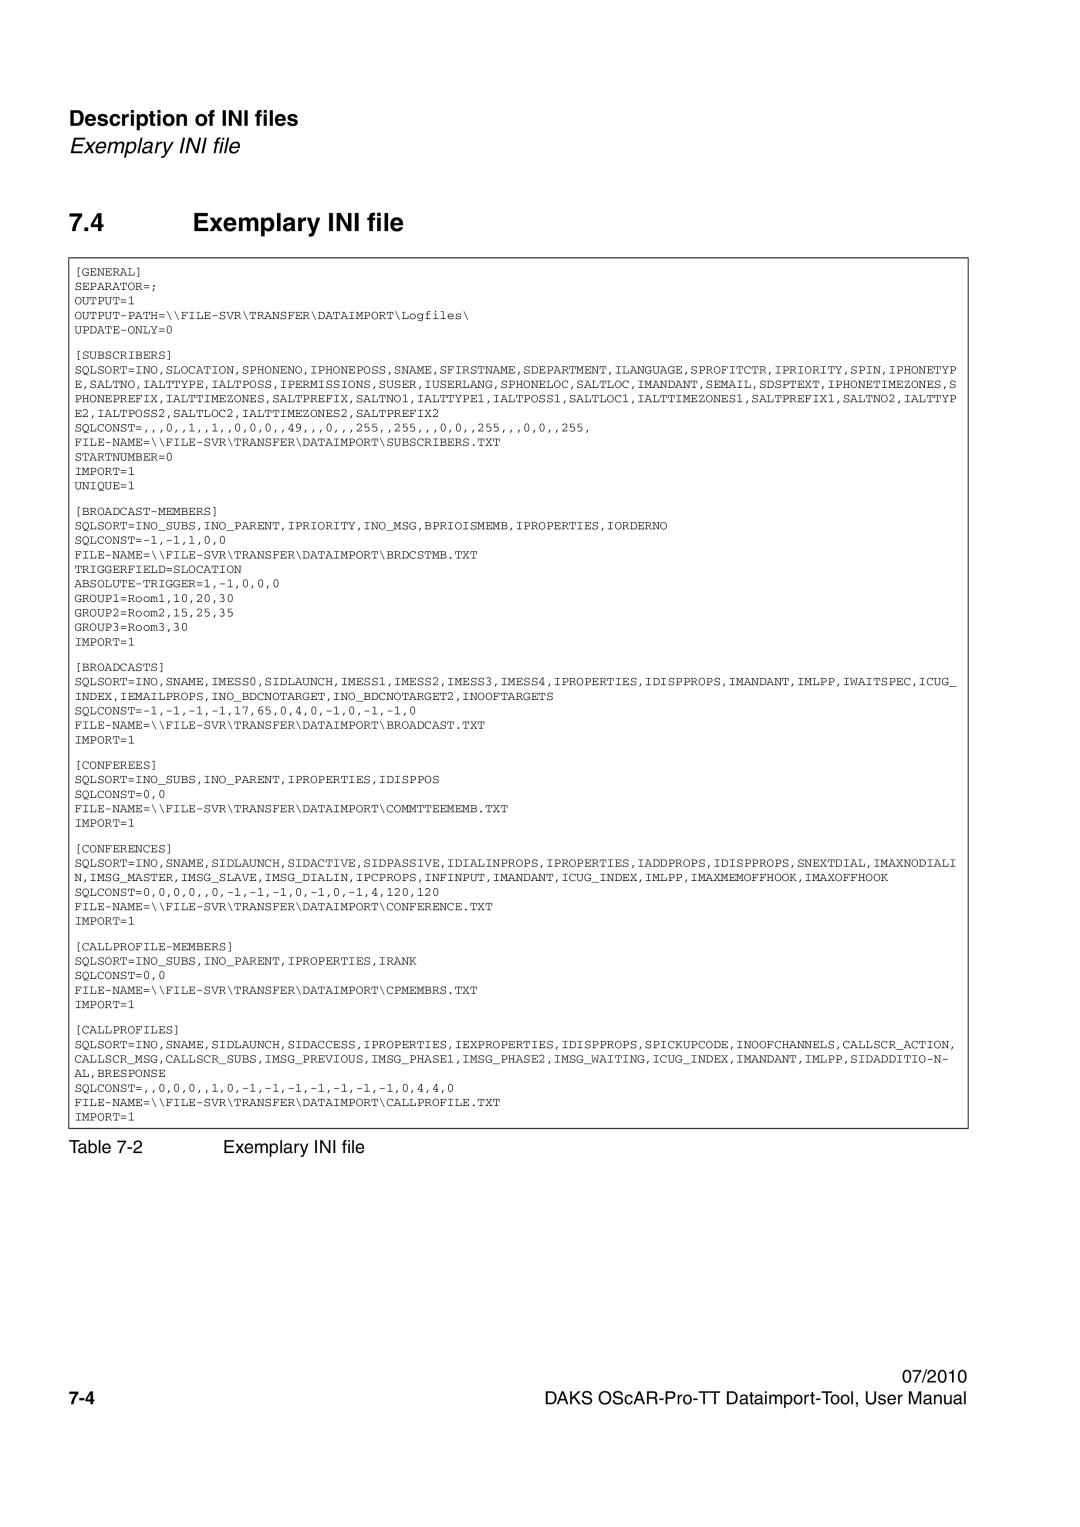 Siemens A31003-S1730-U102-1-7619 user manual 7.4Exemplary INI file, Description of INI files 